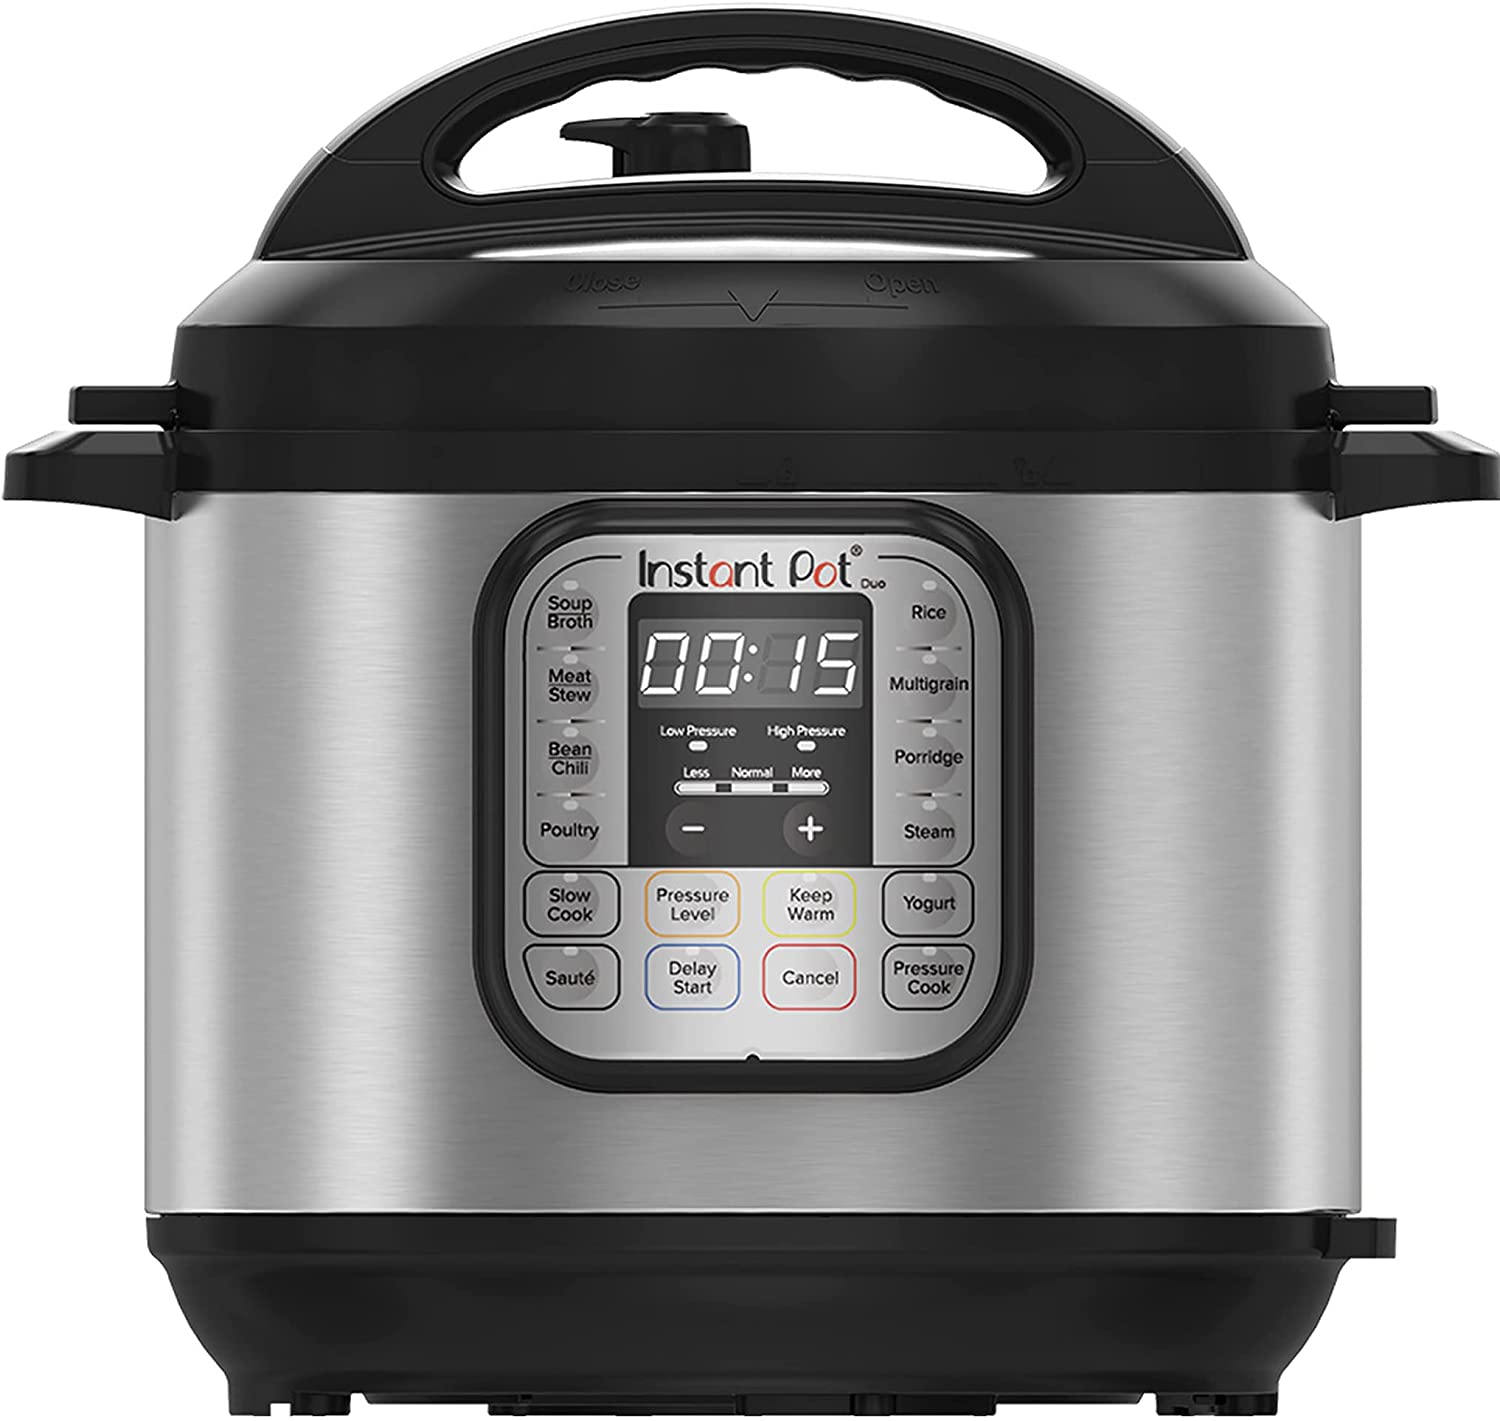 https://www.dontwasteyourmoney.com/wp-content/uploads/2019/12/instant-pot-duo-electric-pressure-cooker-6-quart.jpg